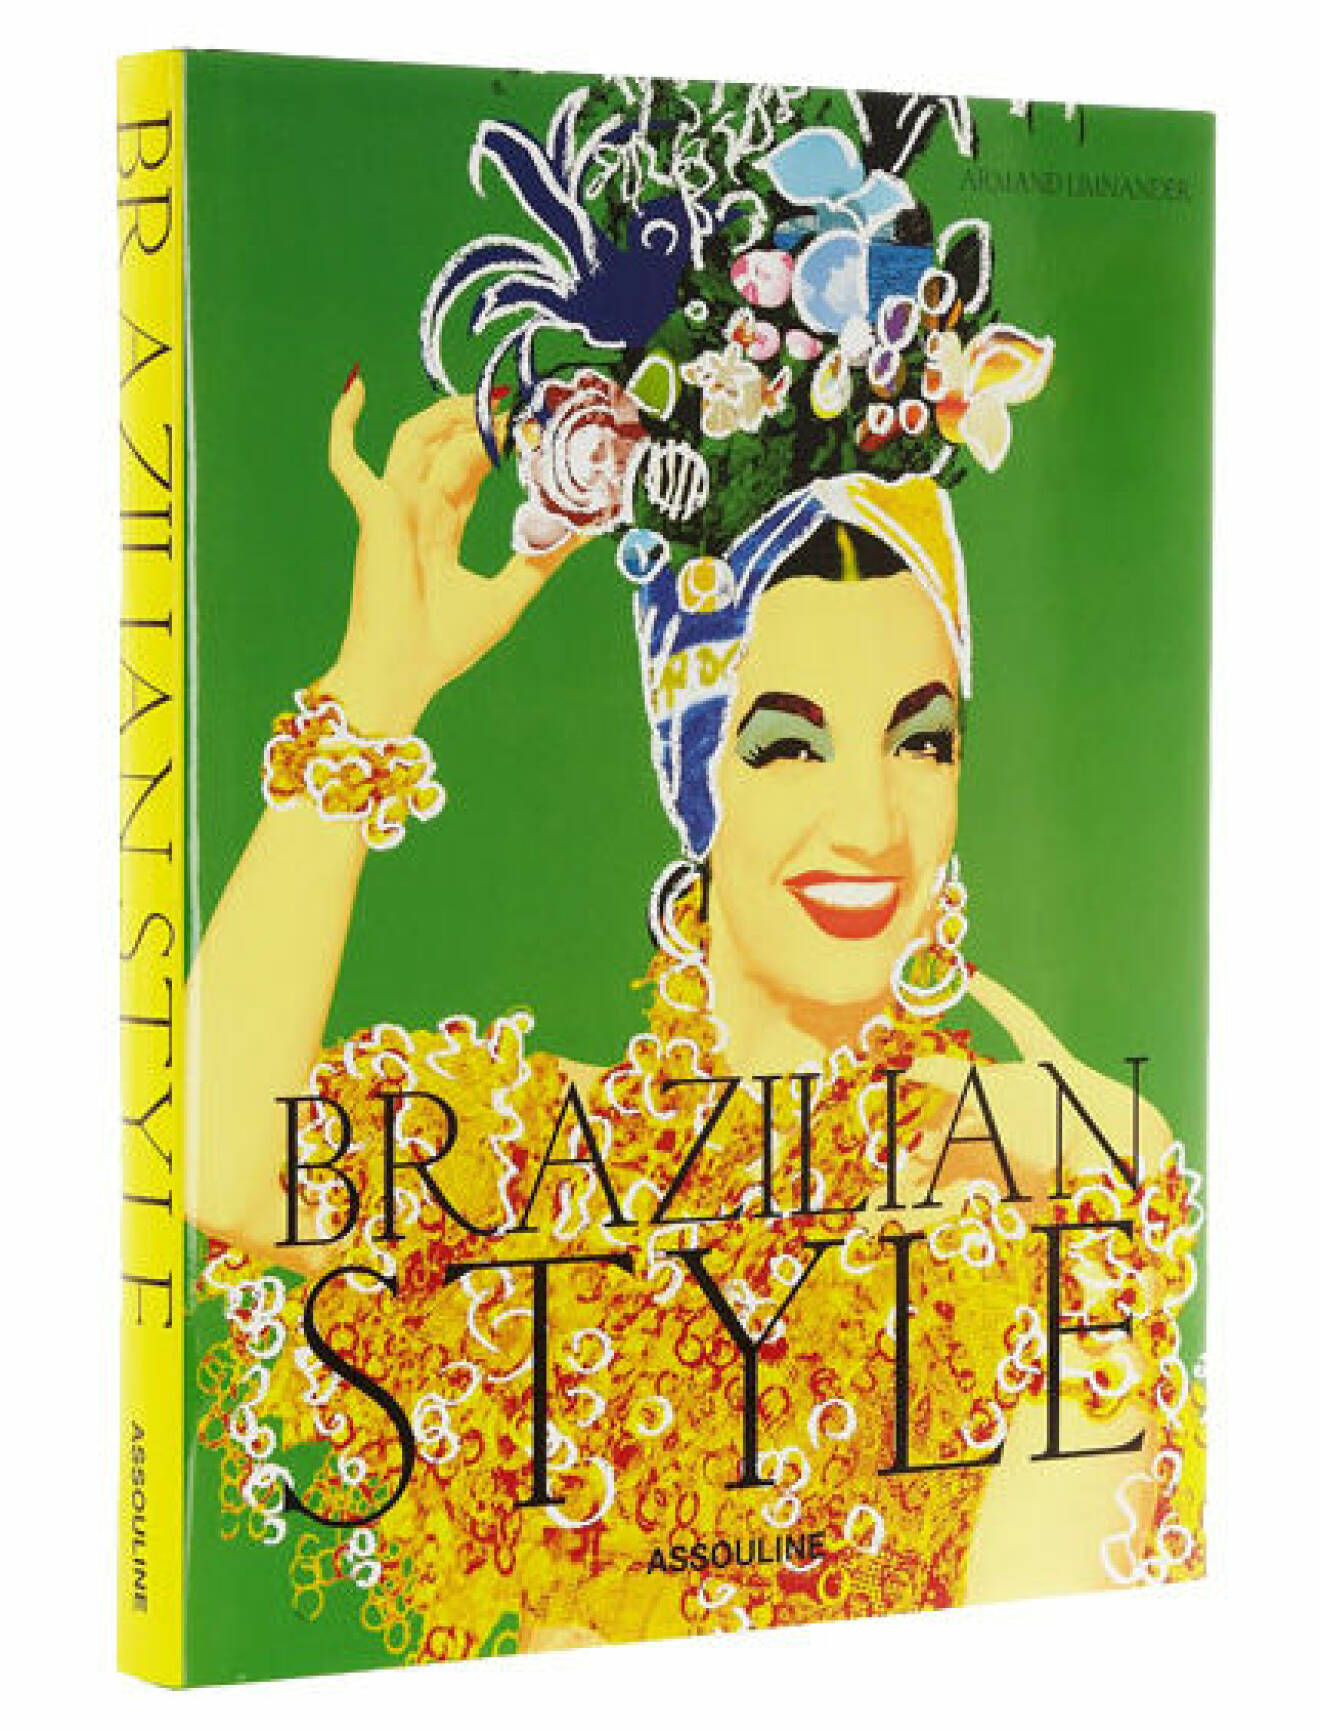 Brazilian style, 385 kr, Assouline Net-a-porter.com